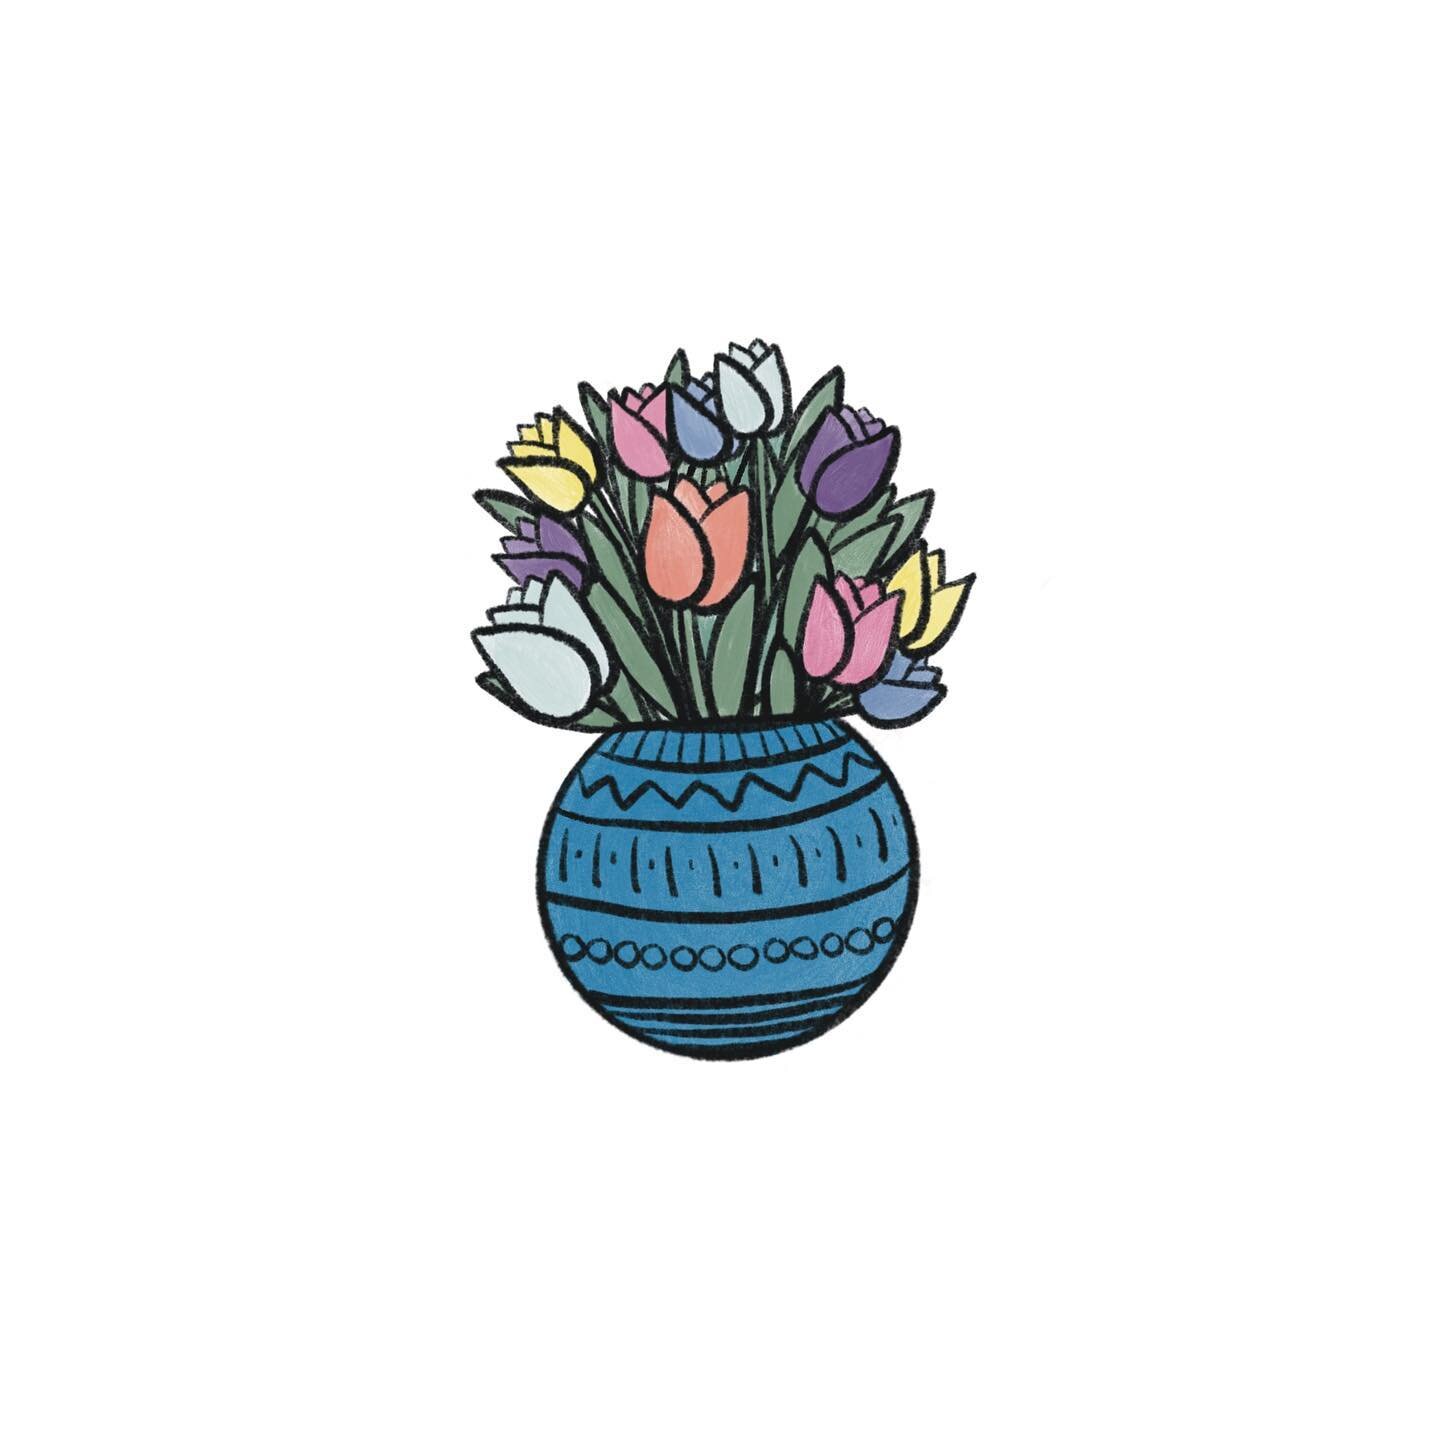 Blooms for Biden 🌷🙏🏻✨
.
.
.
.
.
.
.
#tulips #thankyoucard #paperlove #stationeryaddict #stationerylove #greetingcard #doodlingart #drawsomething #illustration #illustratorsoninstagram #doodlesketch